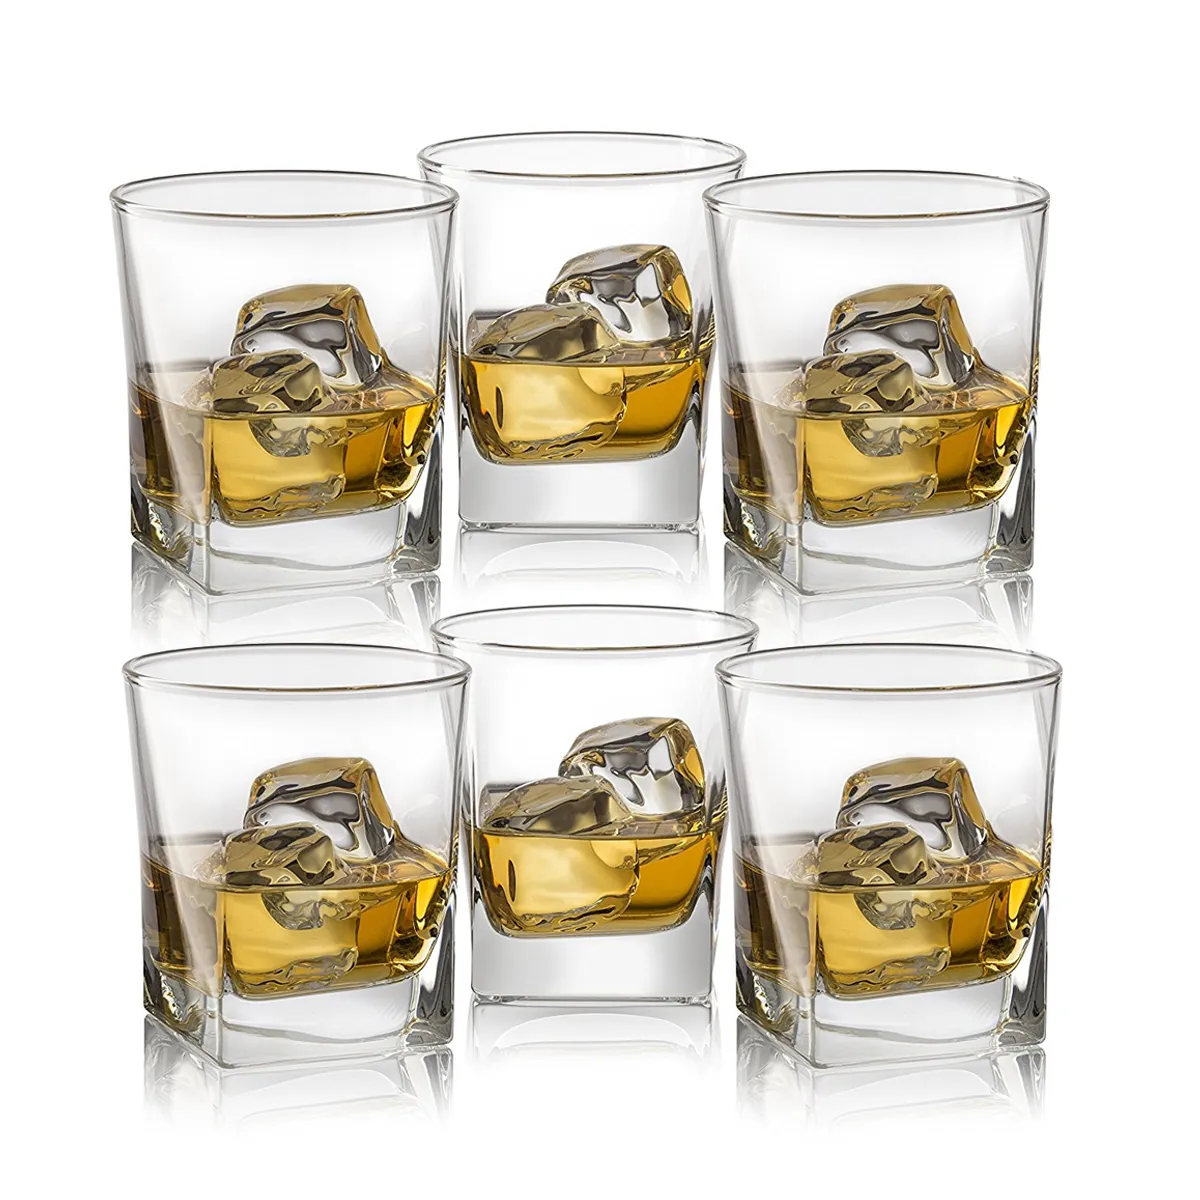 Vaso de whisky doble antiguo, vasos de bar con base pesada de 10 oz para bebidas escocesas, bourbon y cócteles